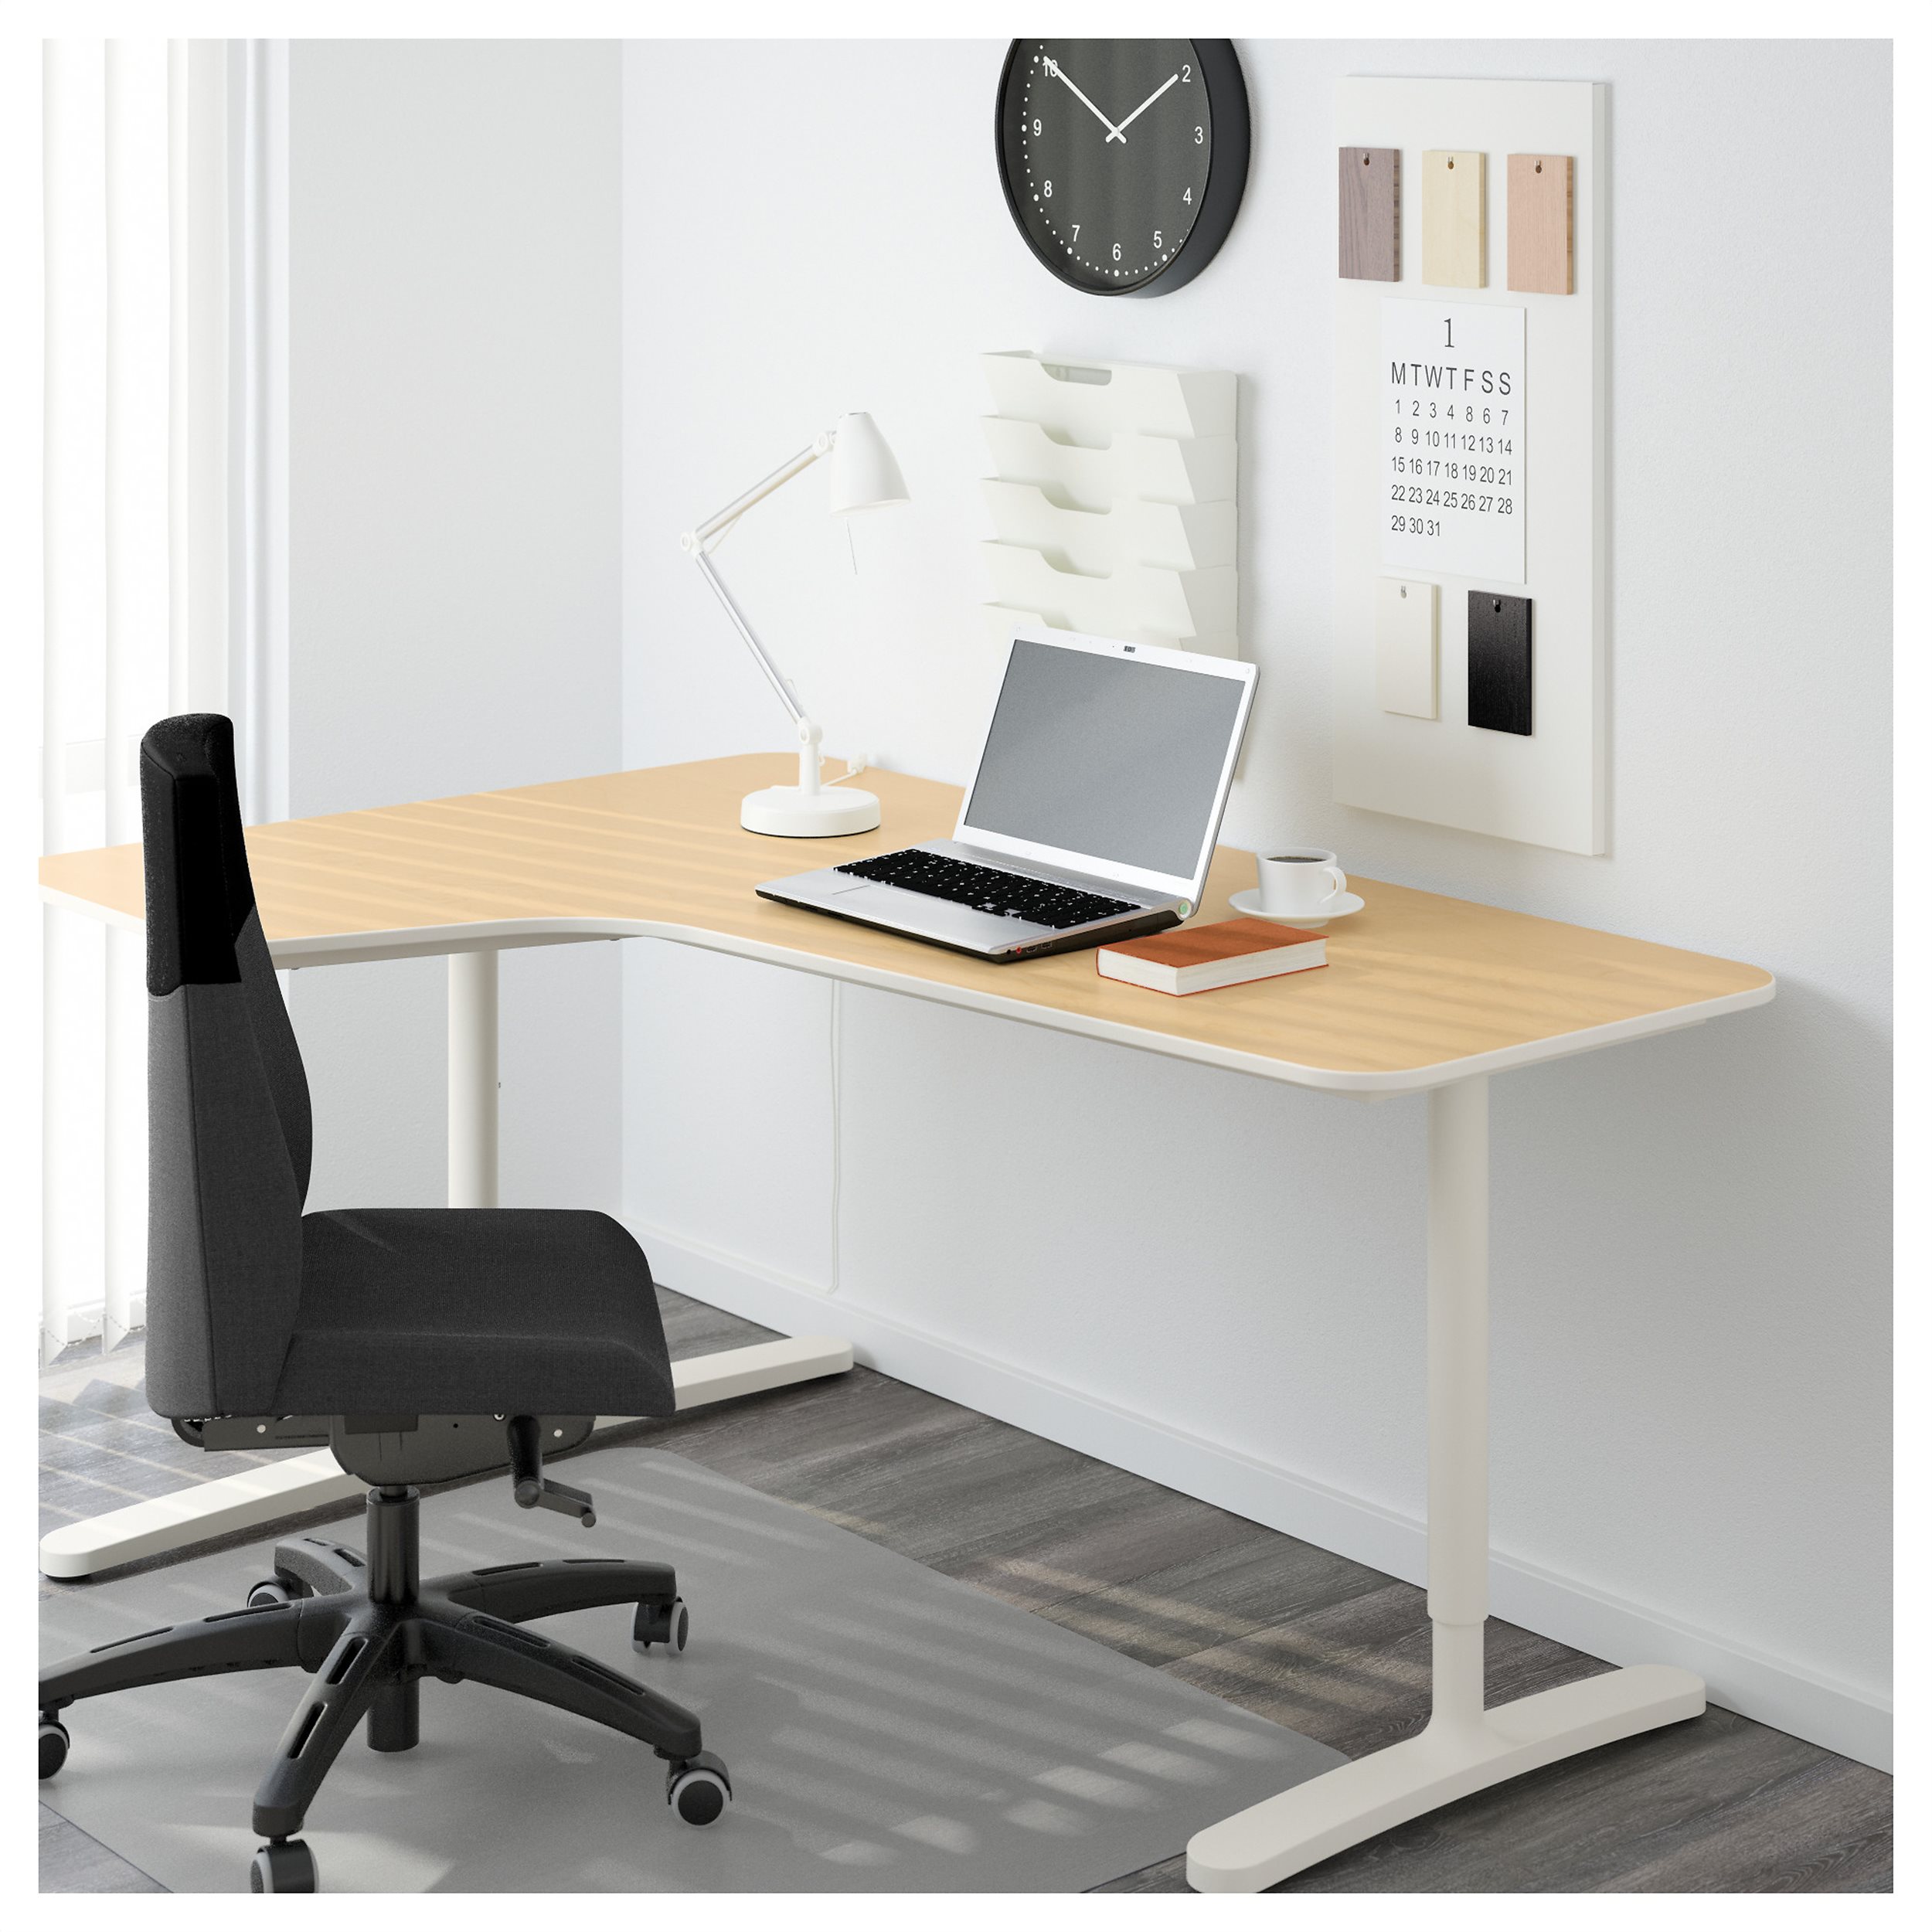 Wooden Ikea Corner Desk Size for Streaming